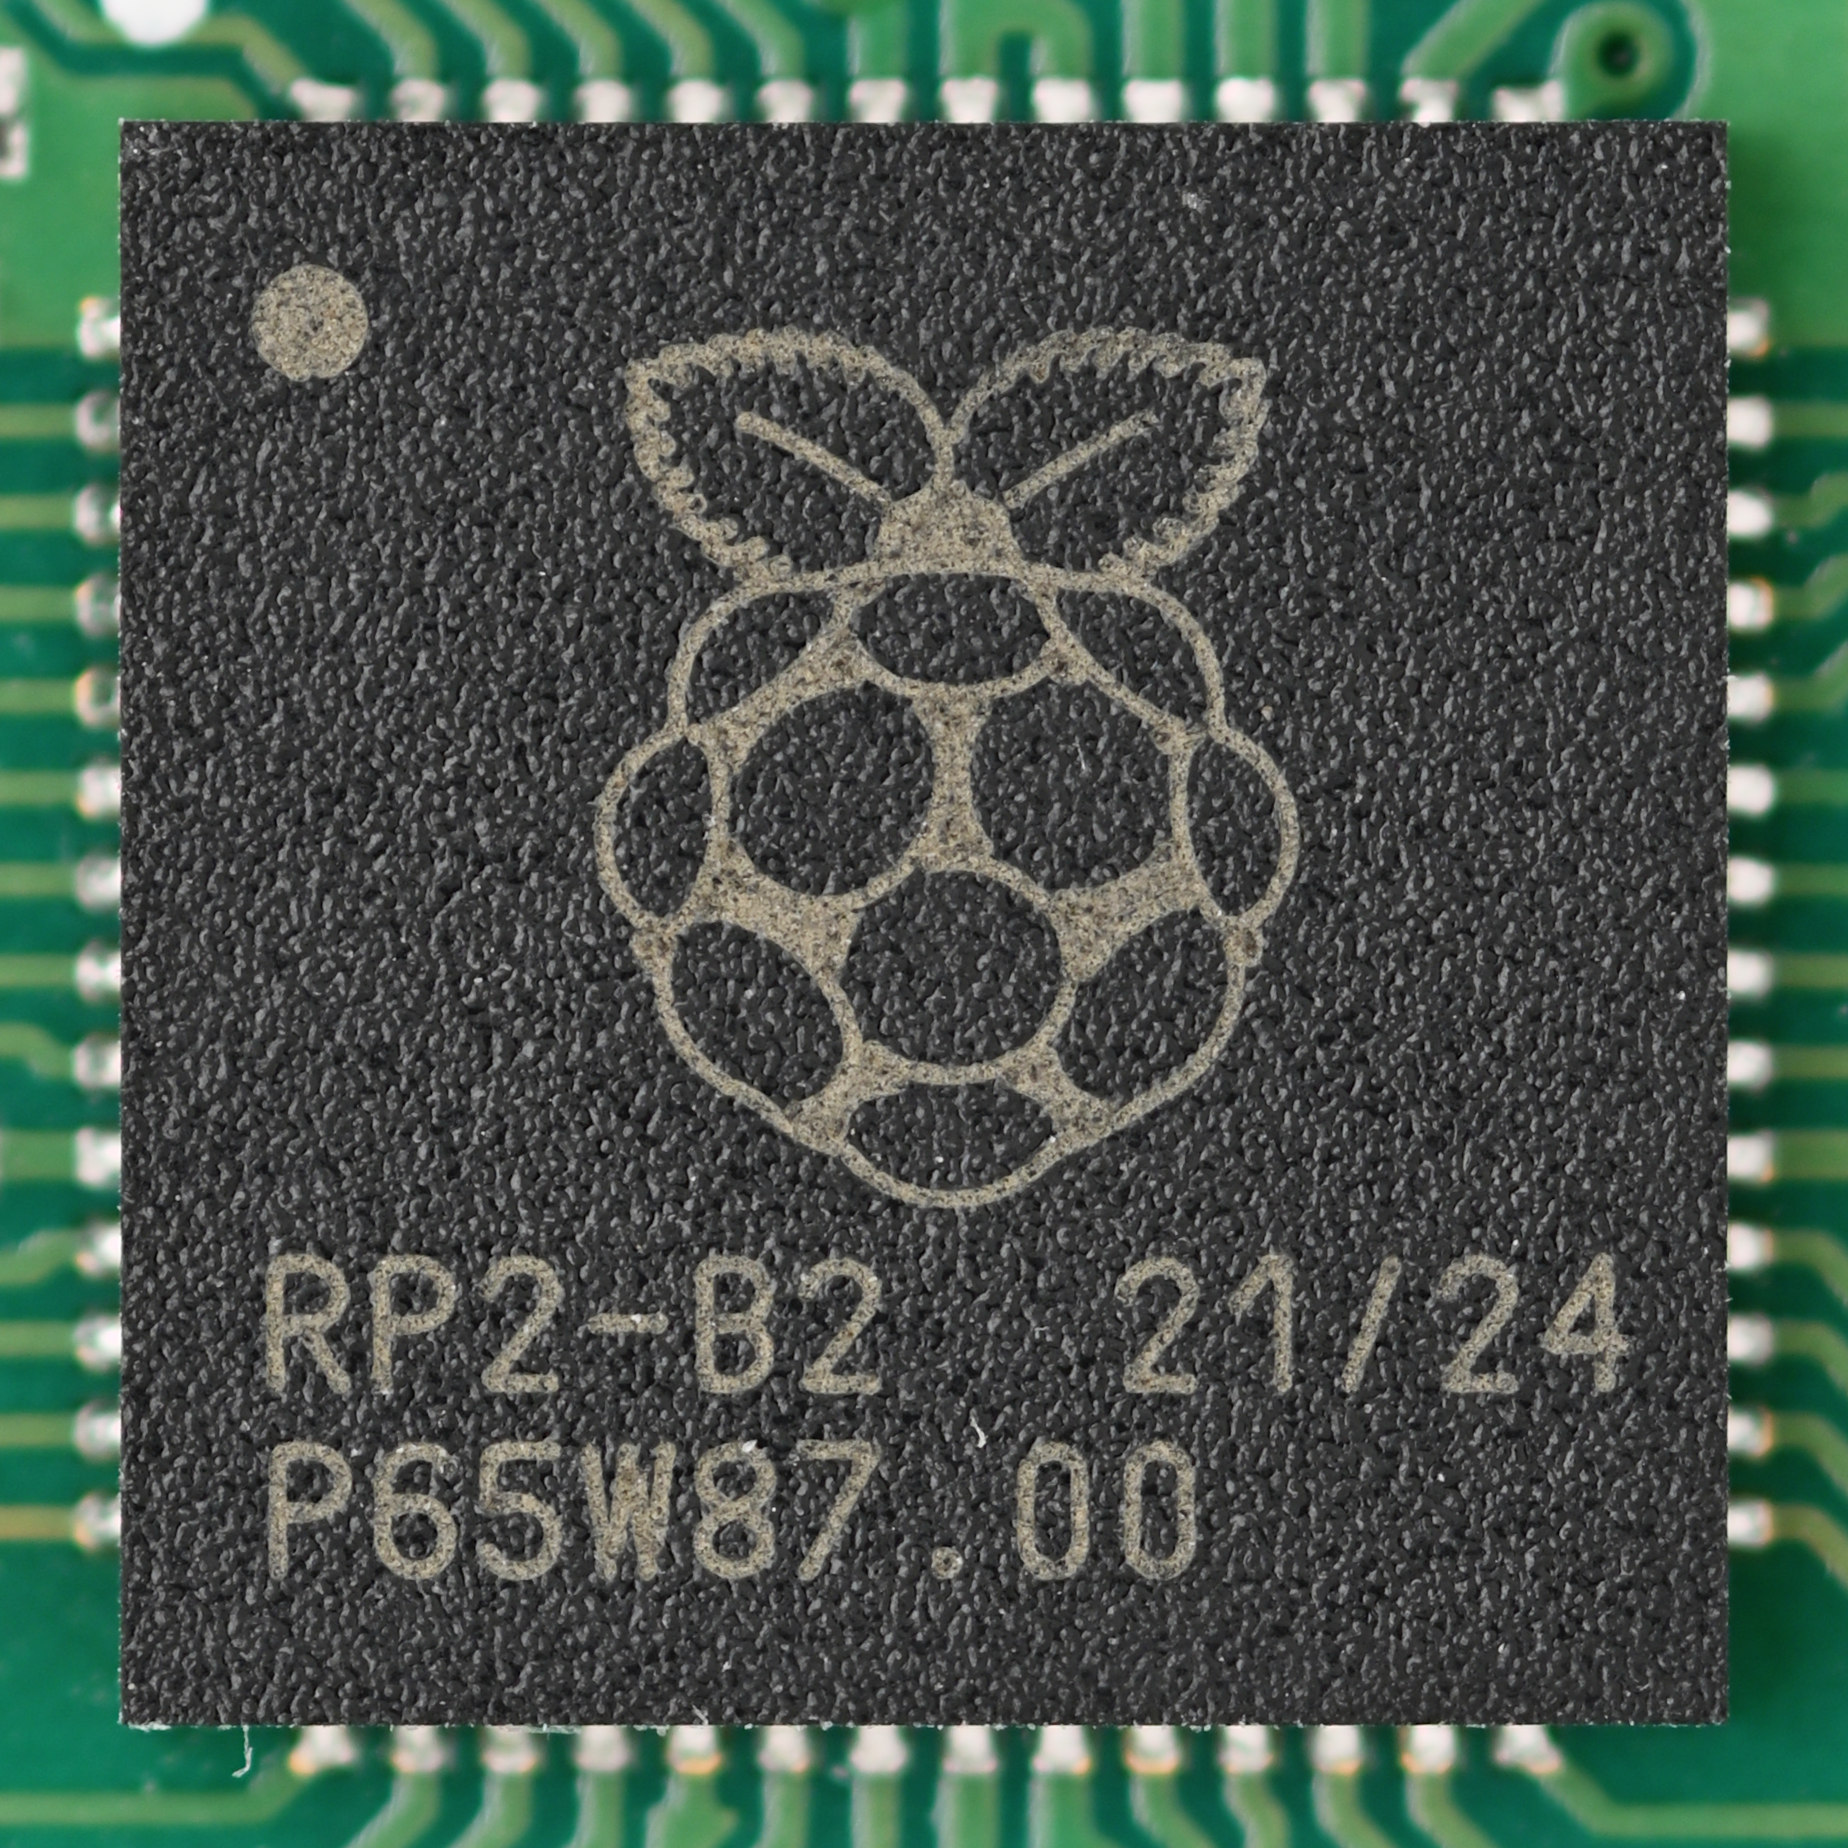 RP2040 - Wikipedia